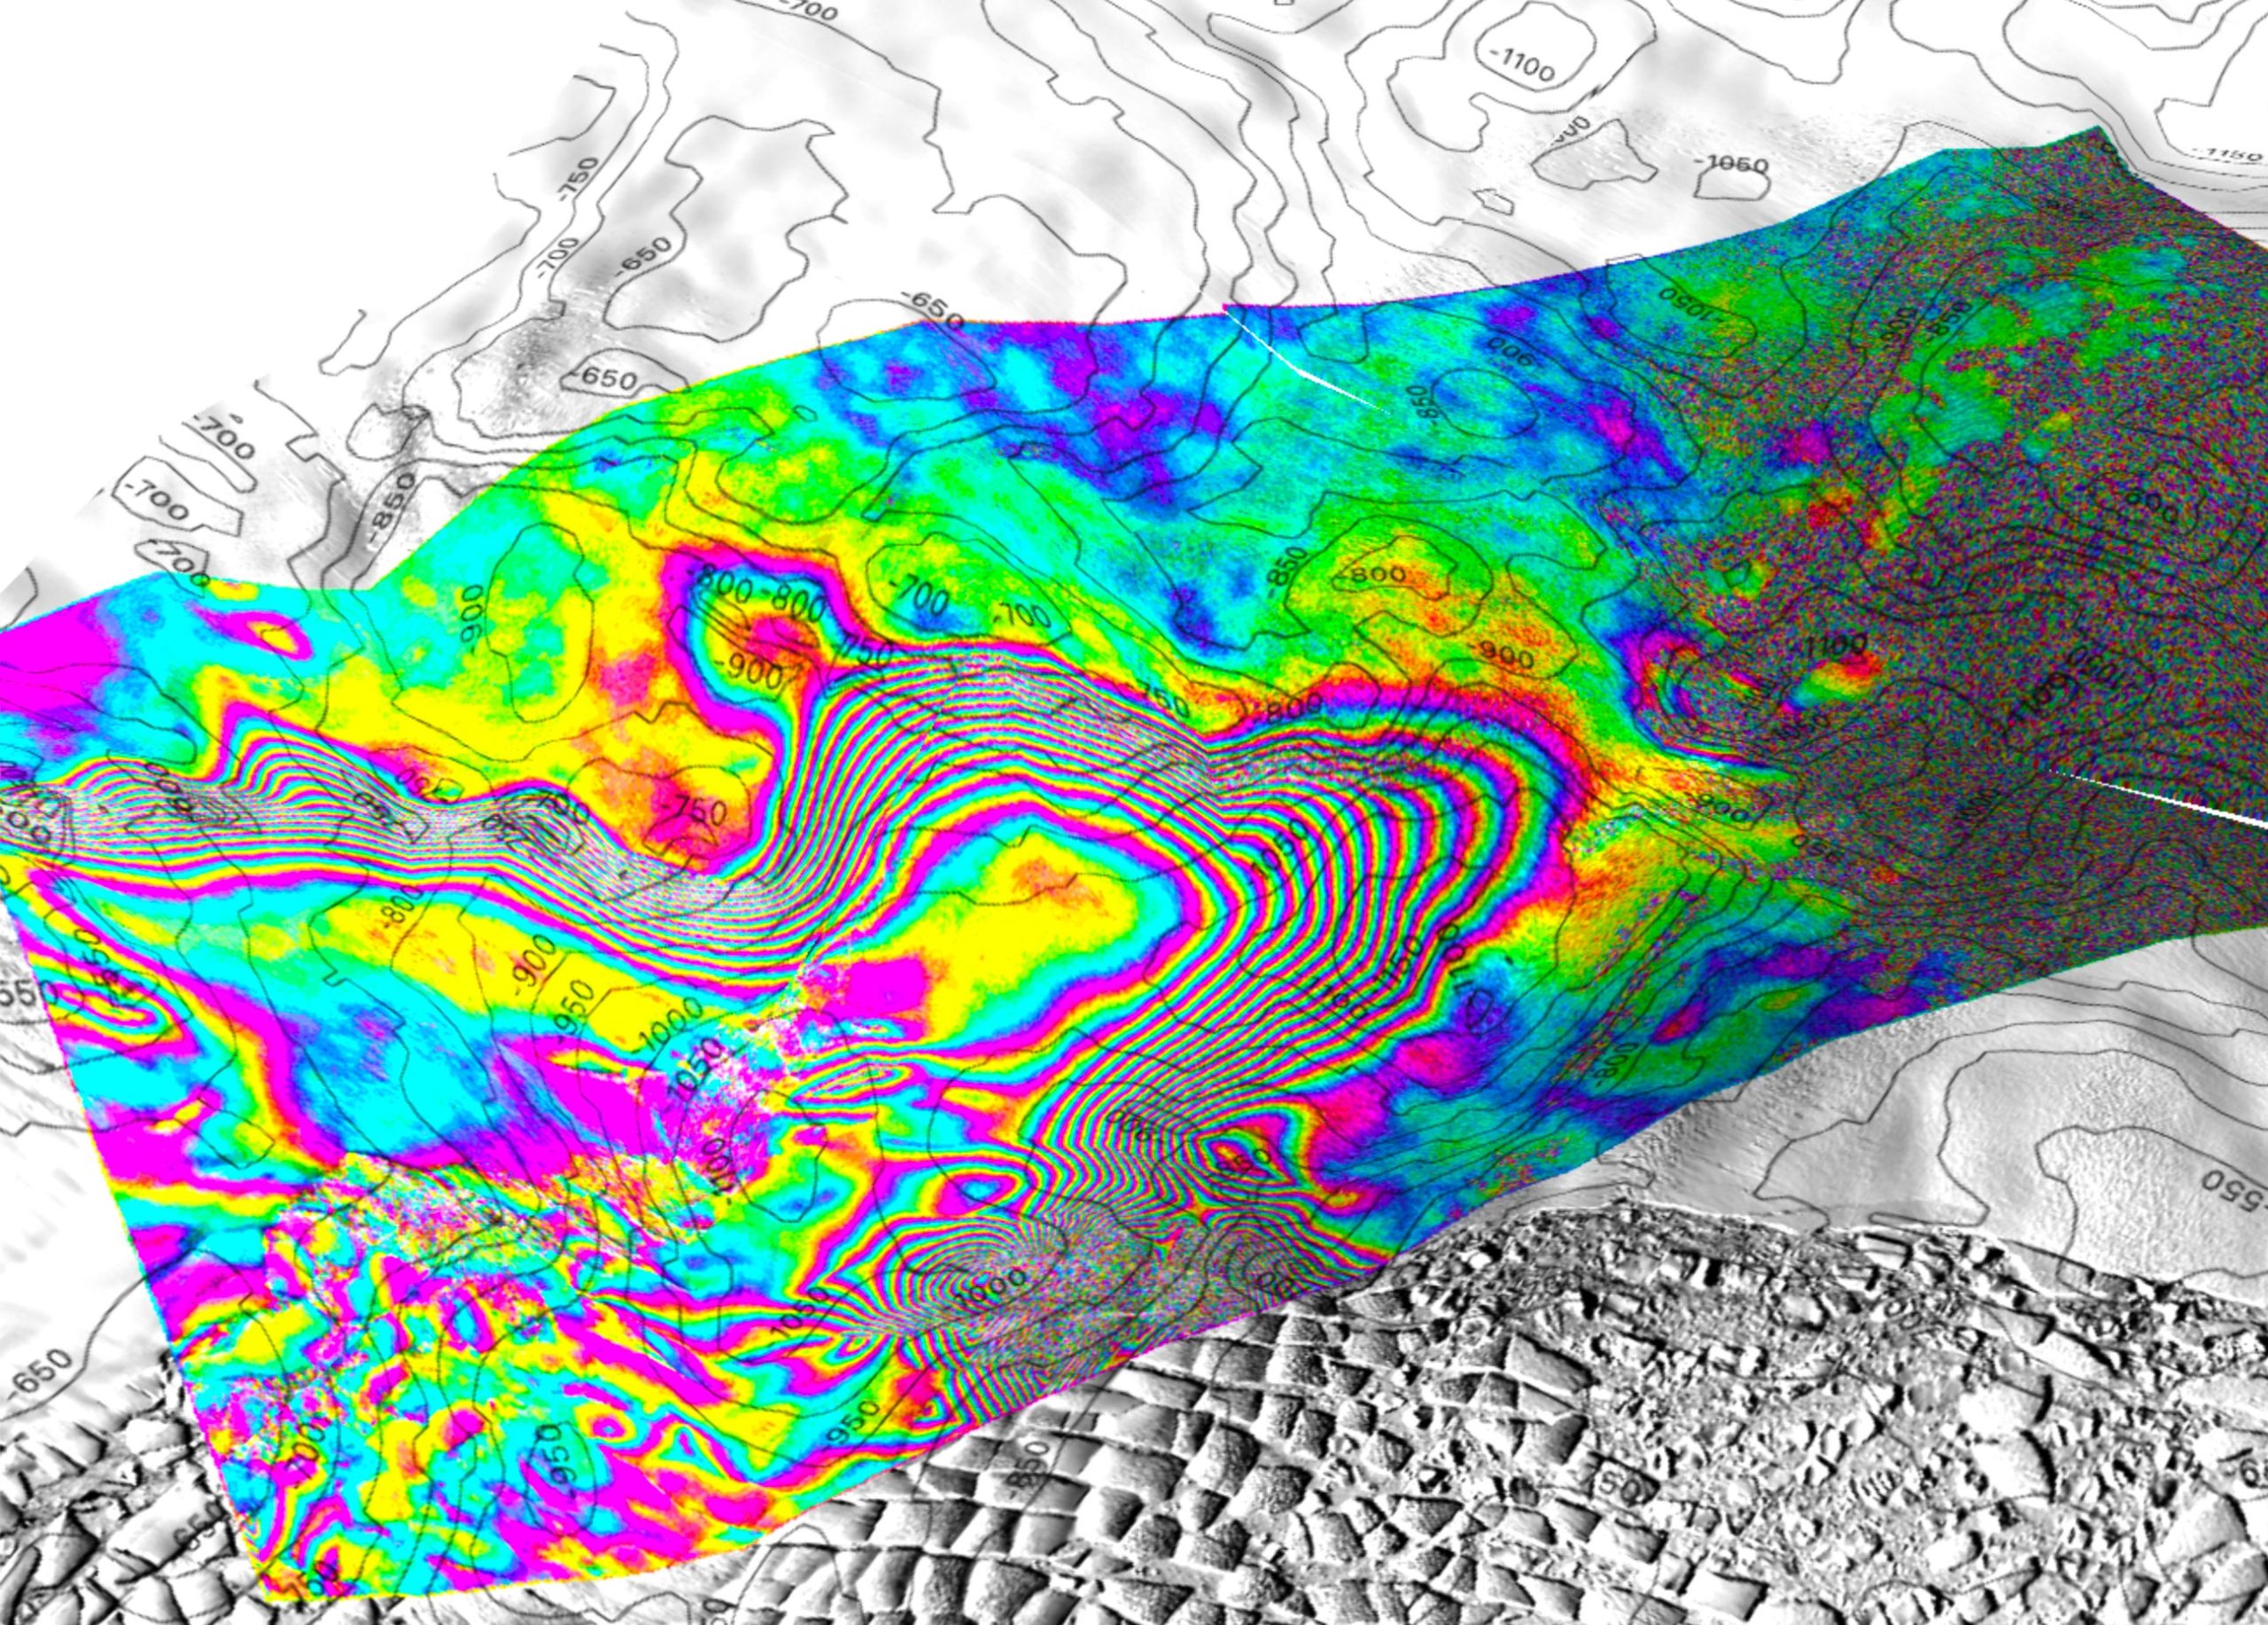 Satellites reveal “intense melting” beneath Antarctica’s Thwaites Glacier